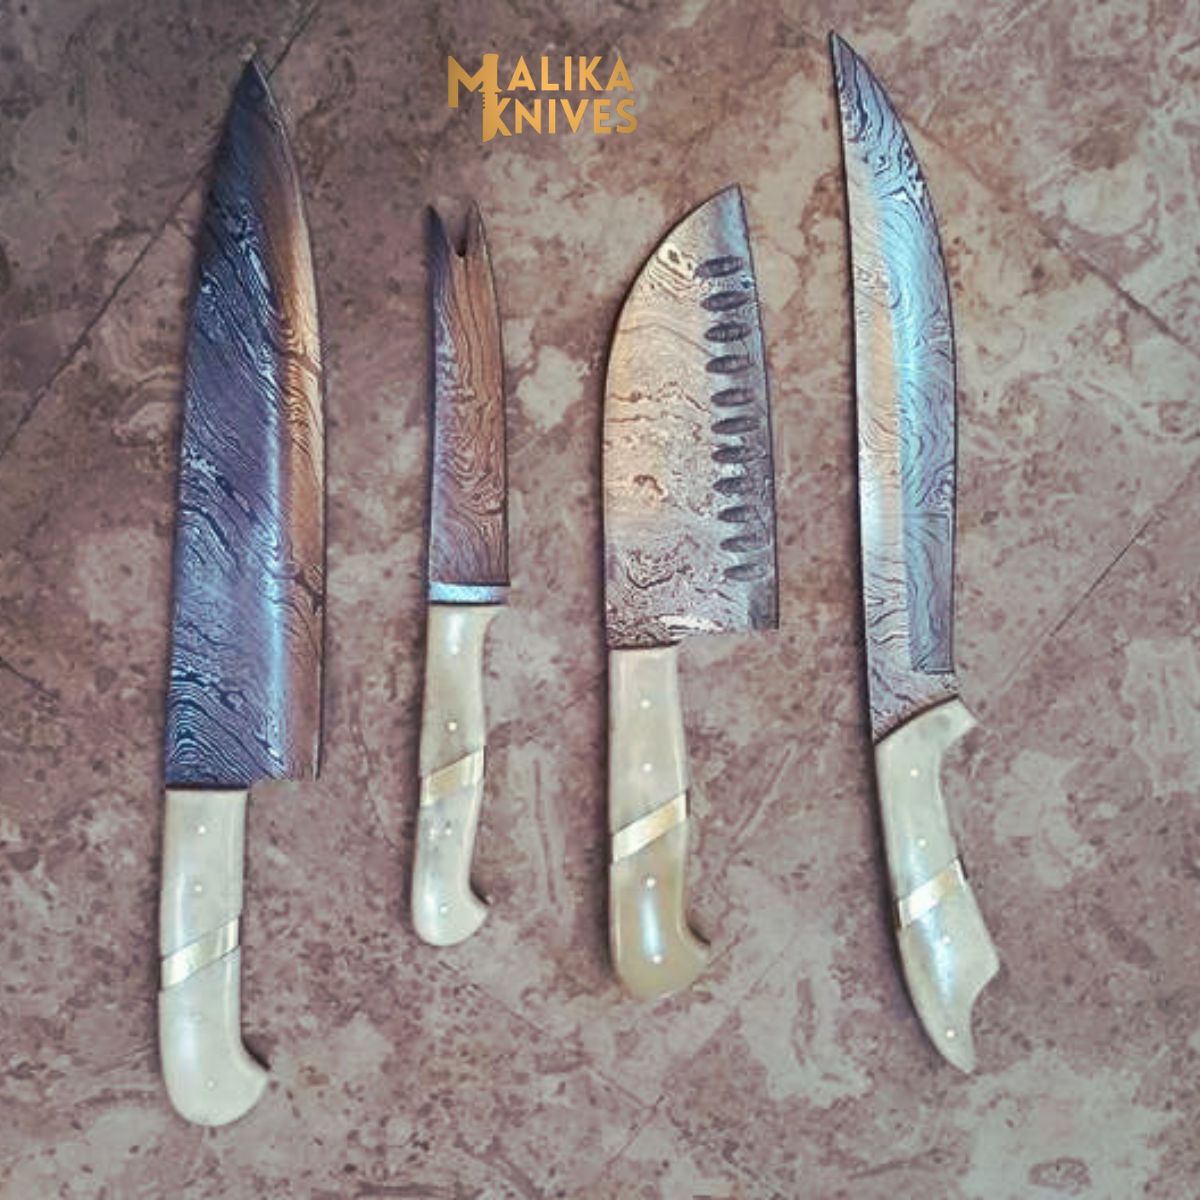 Chef Knives Set Camel Bone Handle